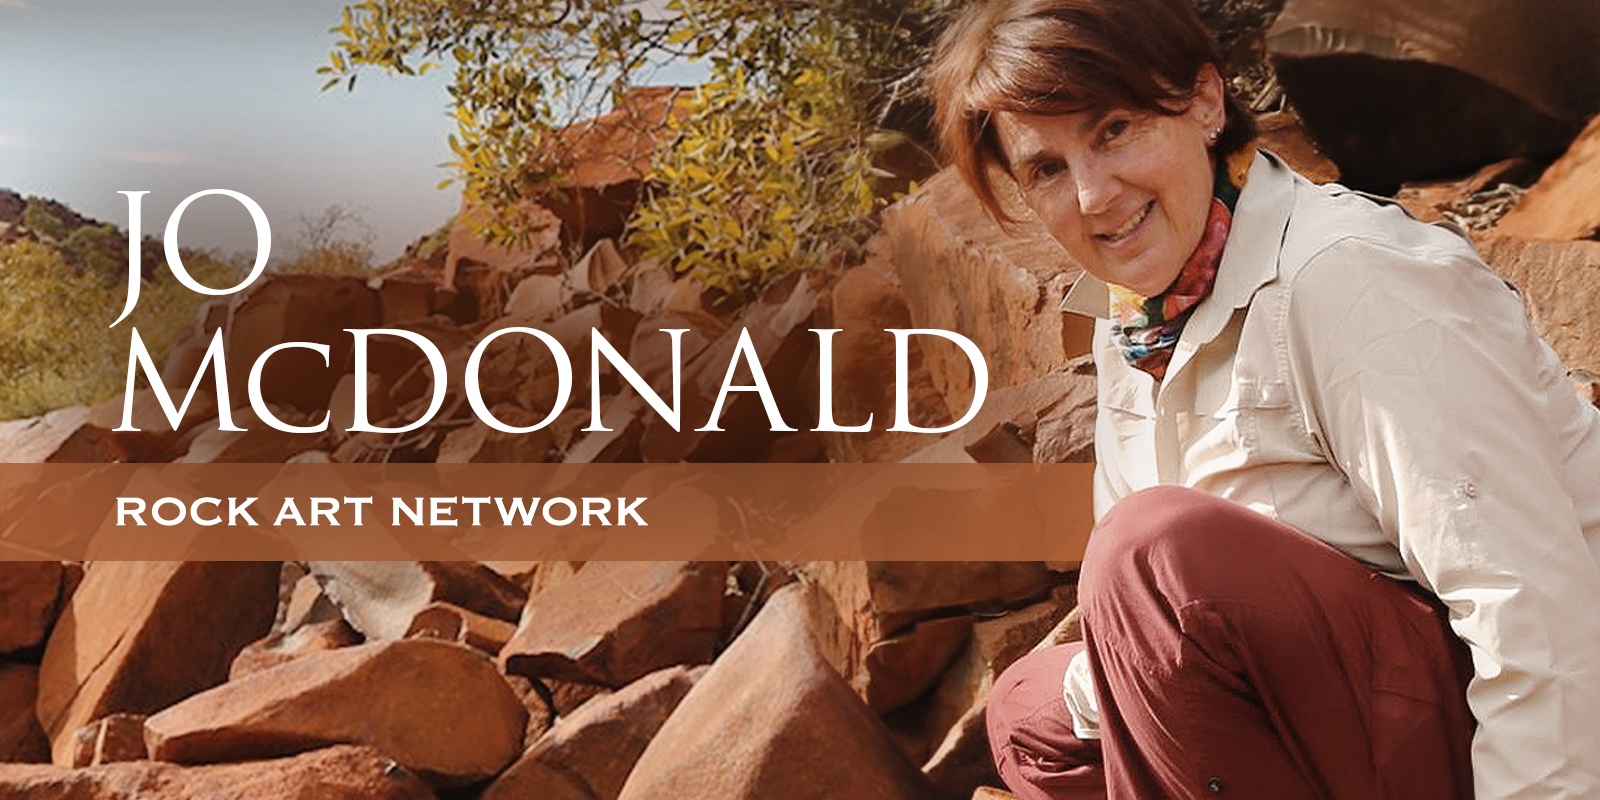 The Rock Art Network Jo McDonald